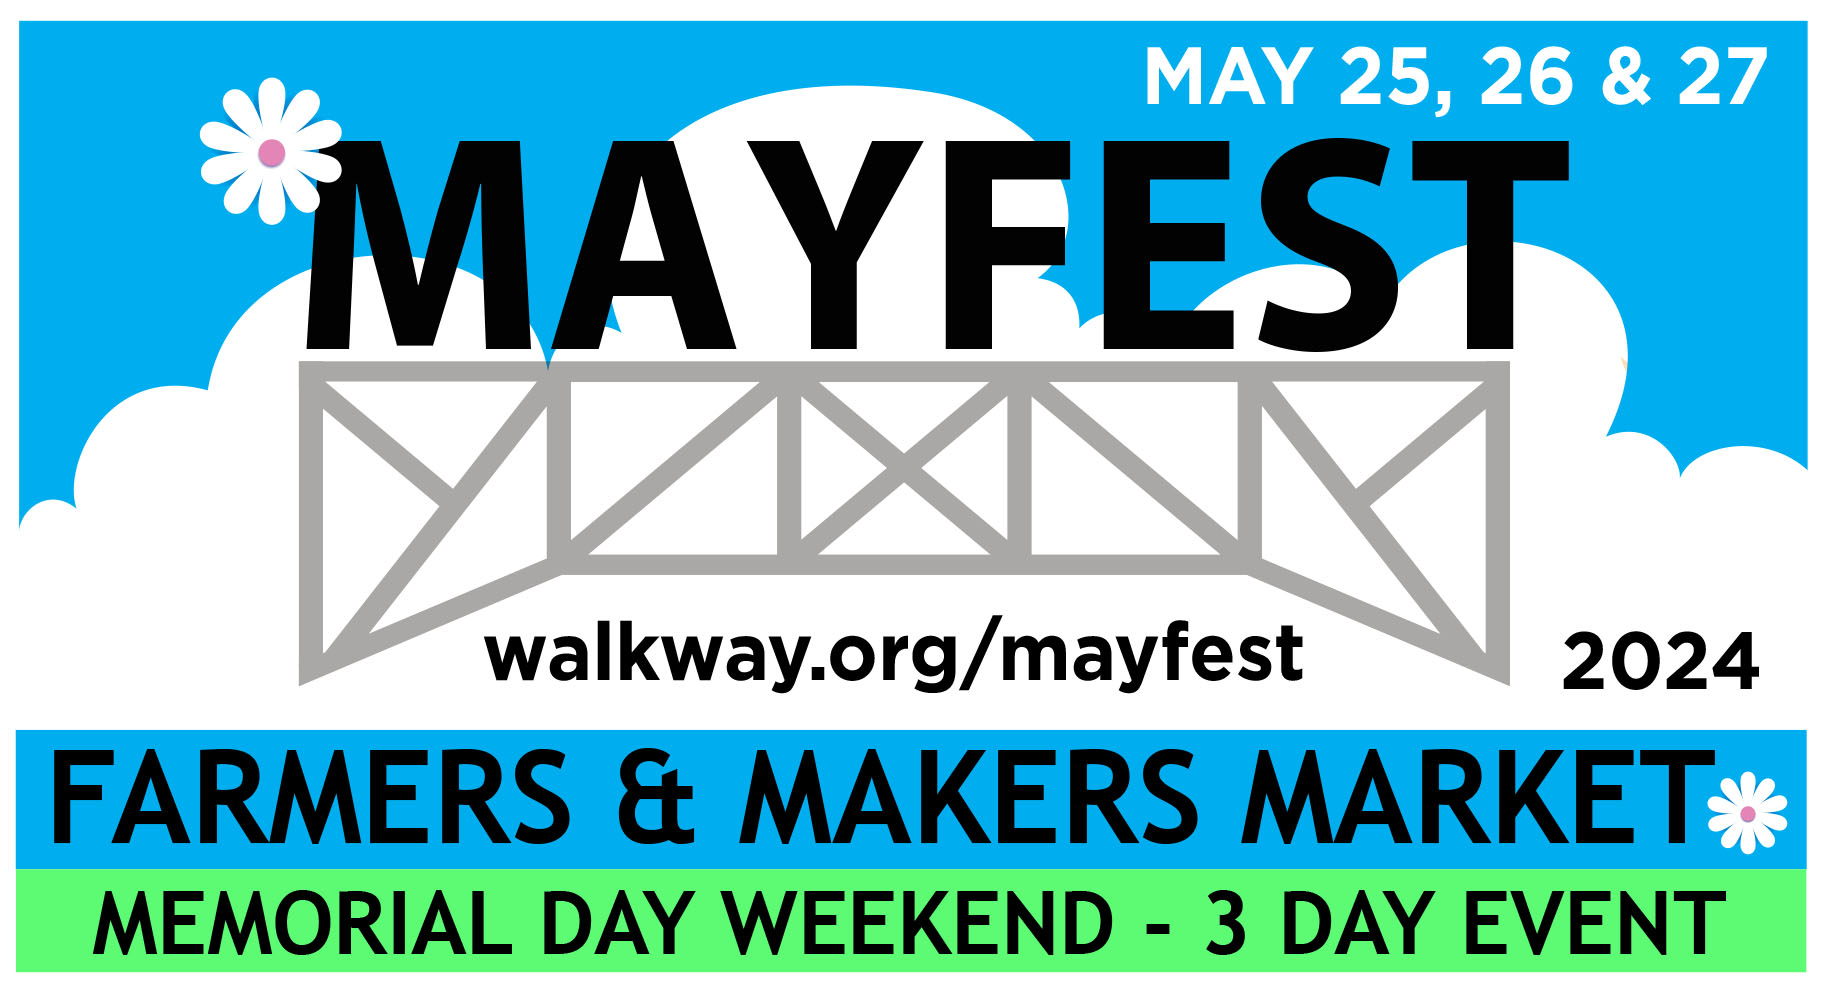 Mayfest event flyer